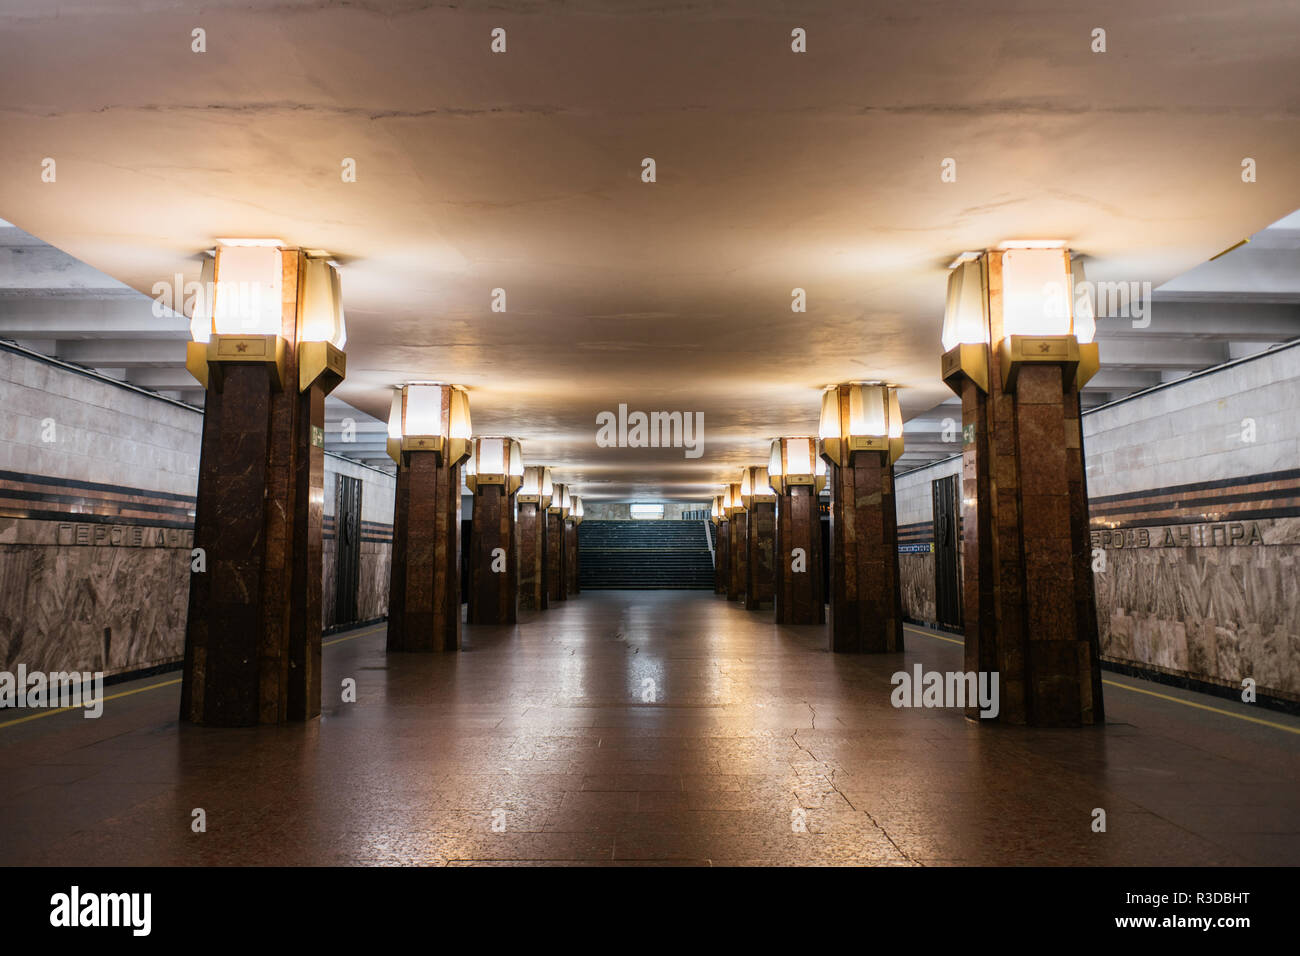 Kyiv subway station interior with no people and dark platform Stock Photo